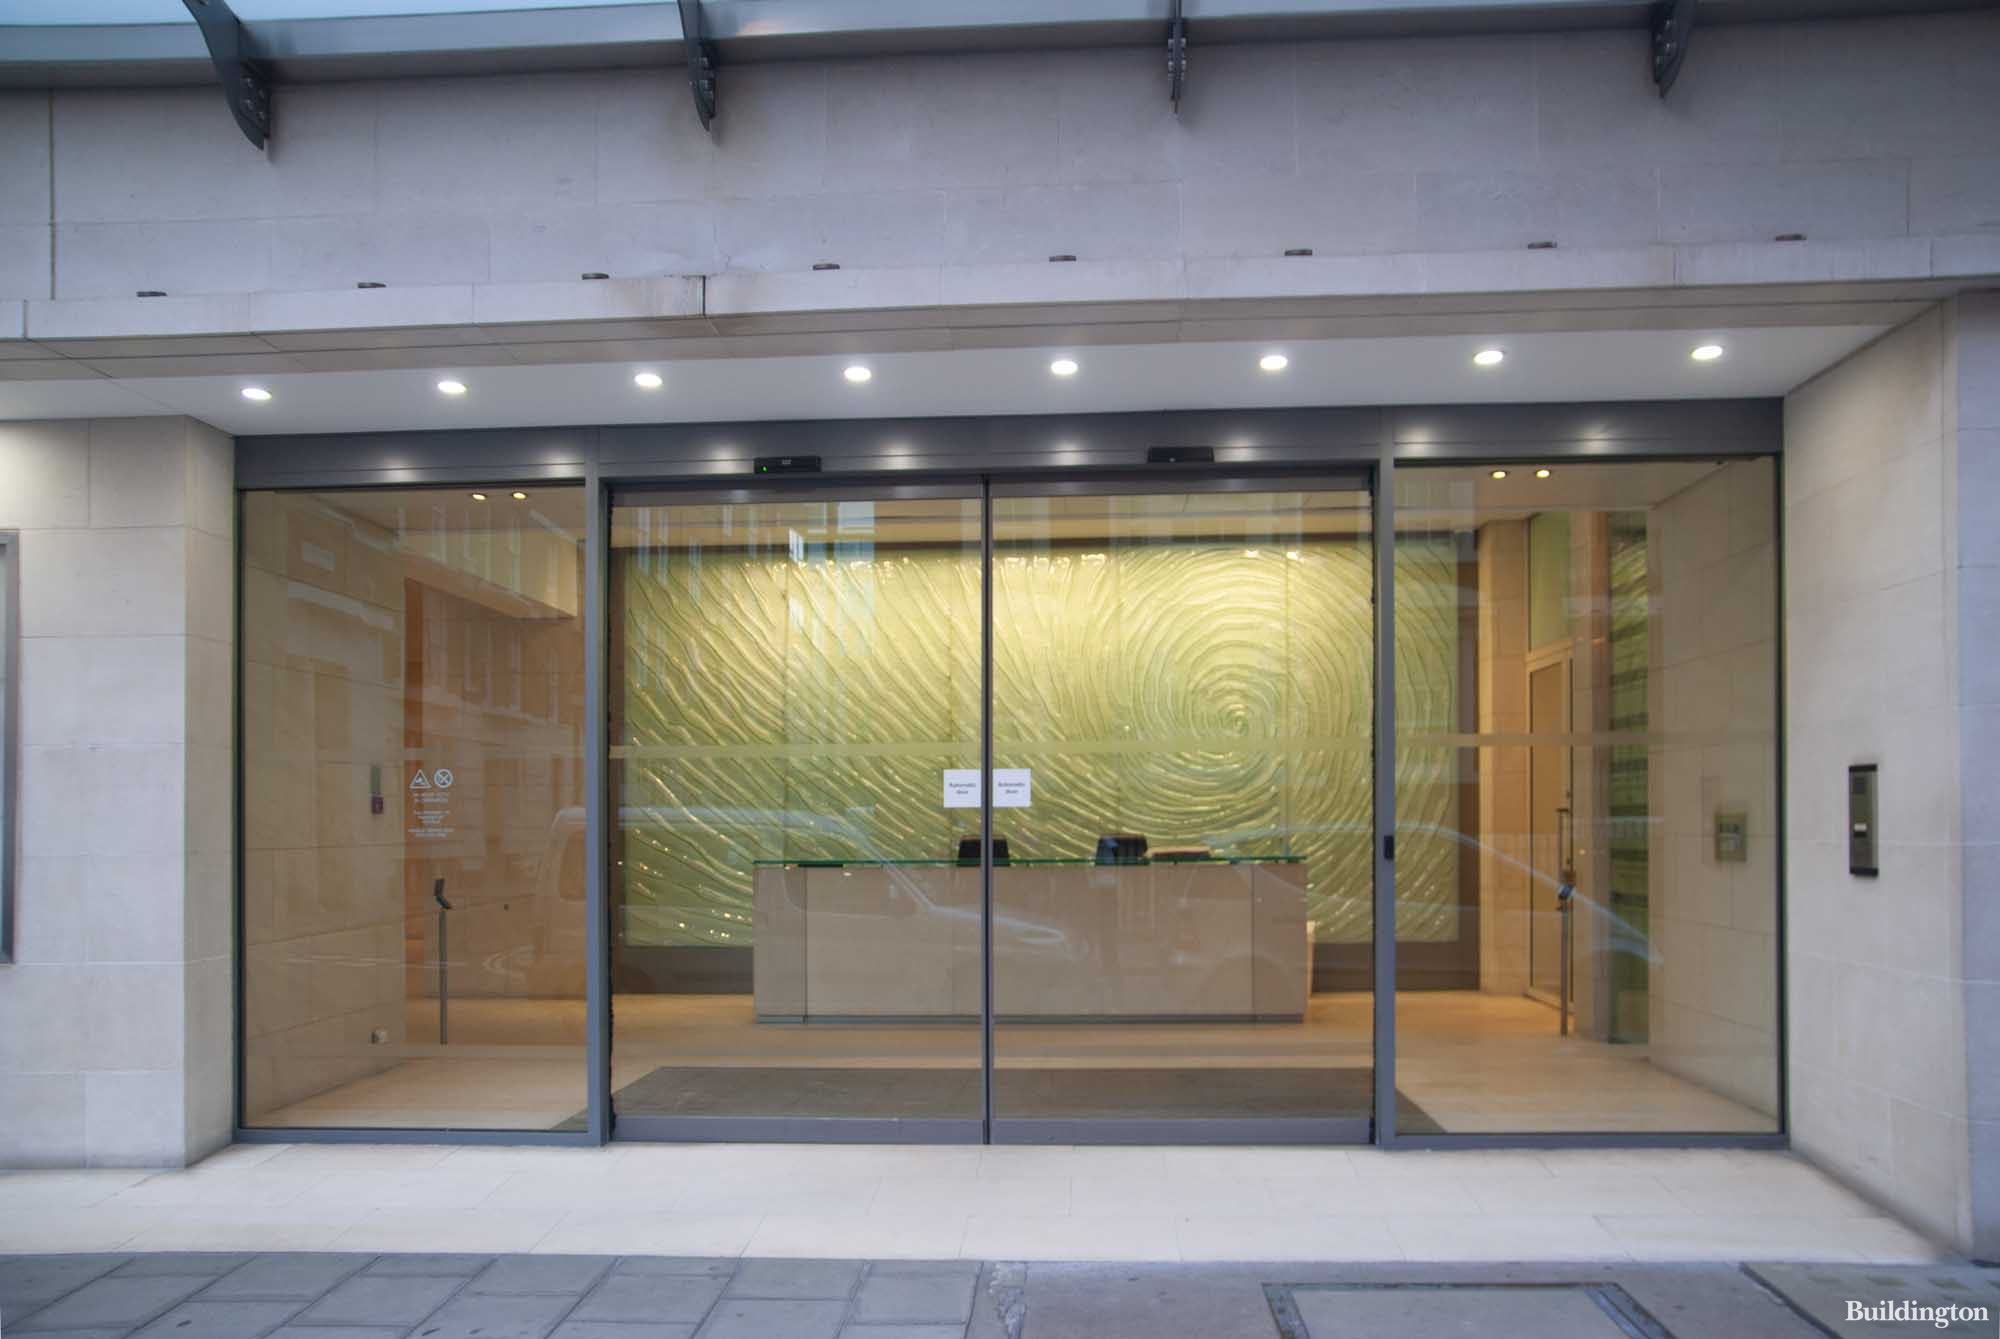 20 Balderton Street office building entrance in June 2014